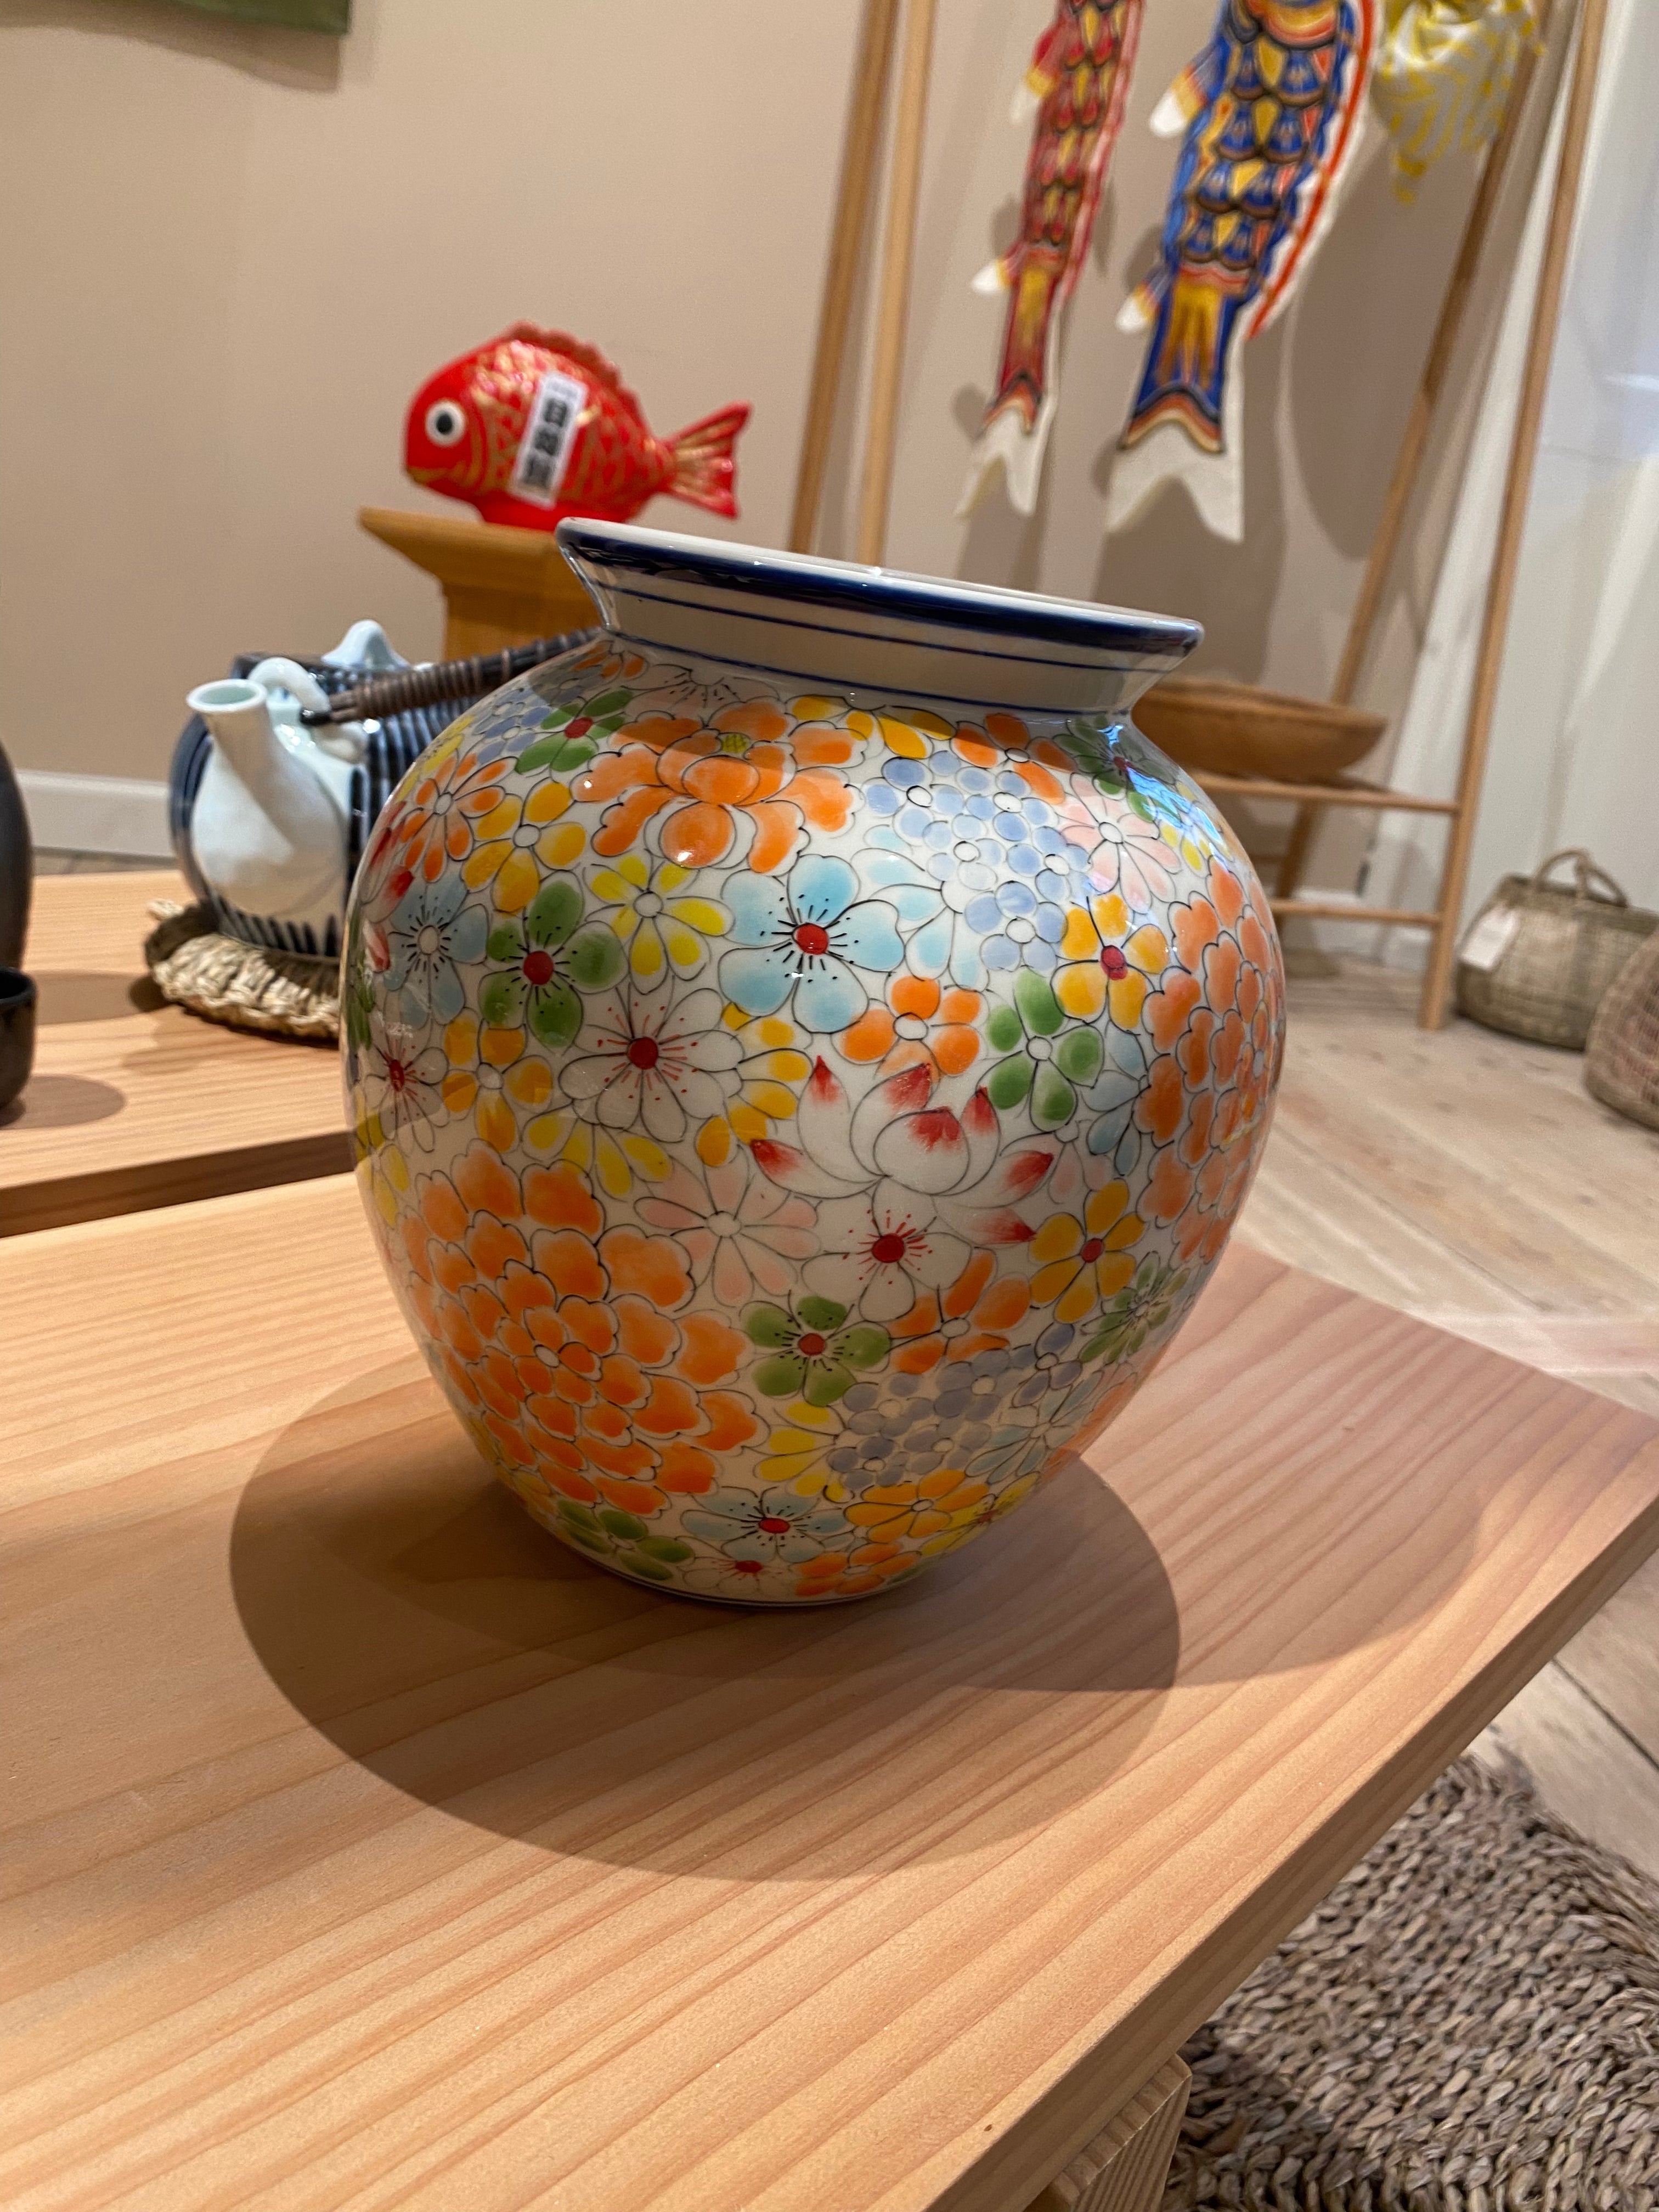 Round vase with flowers